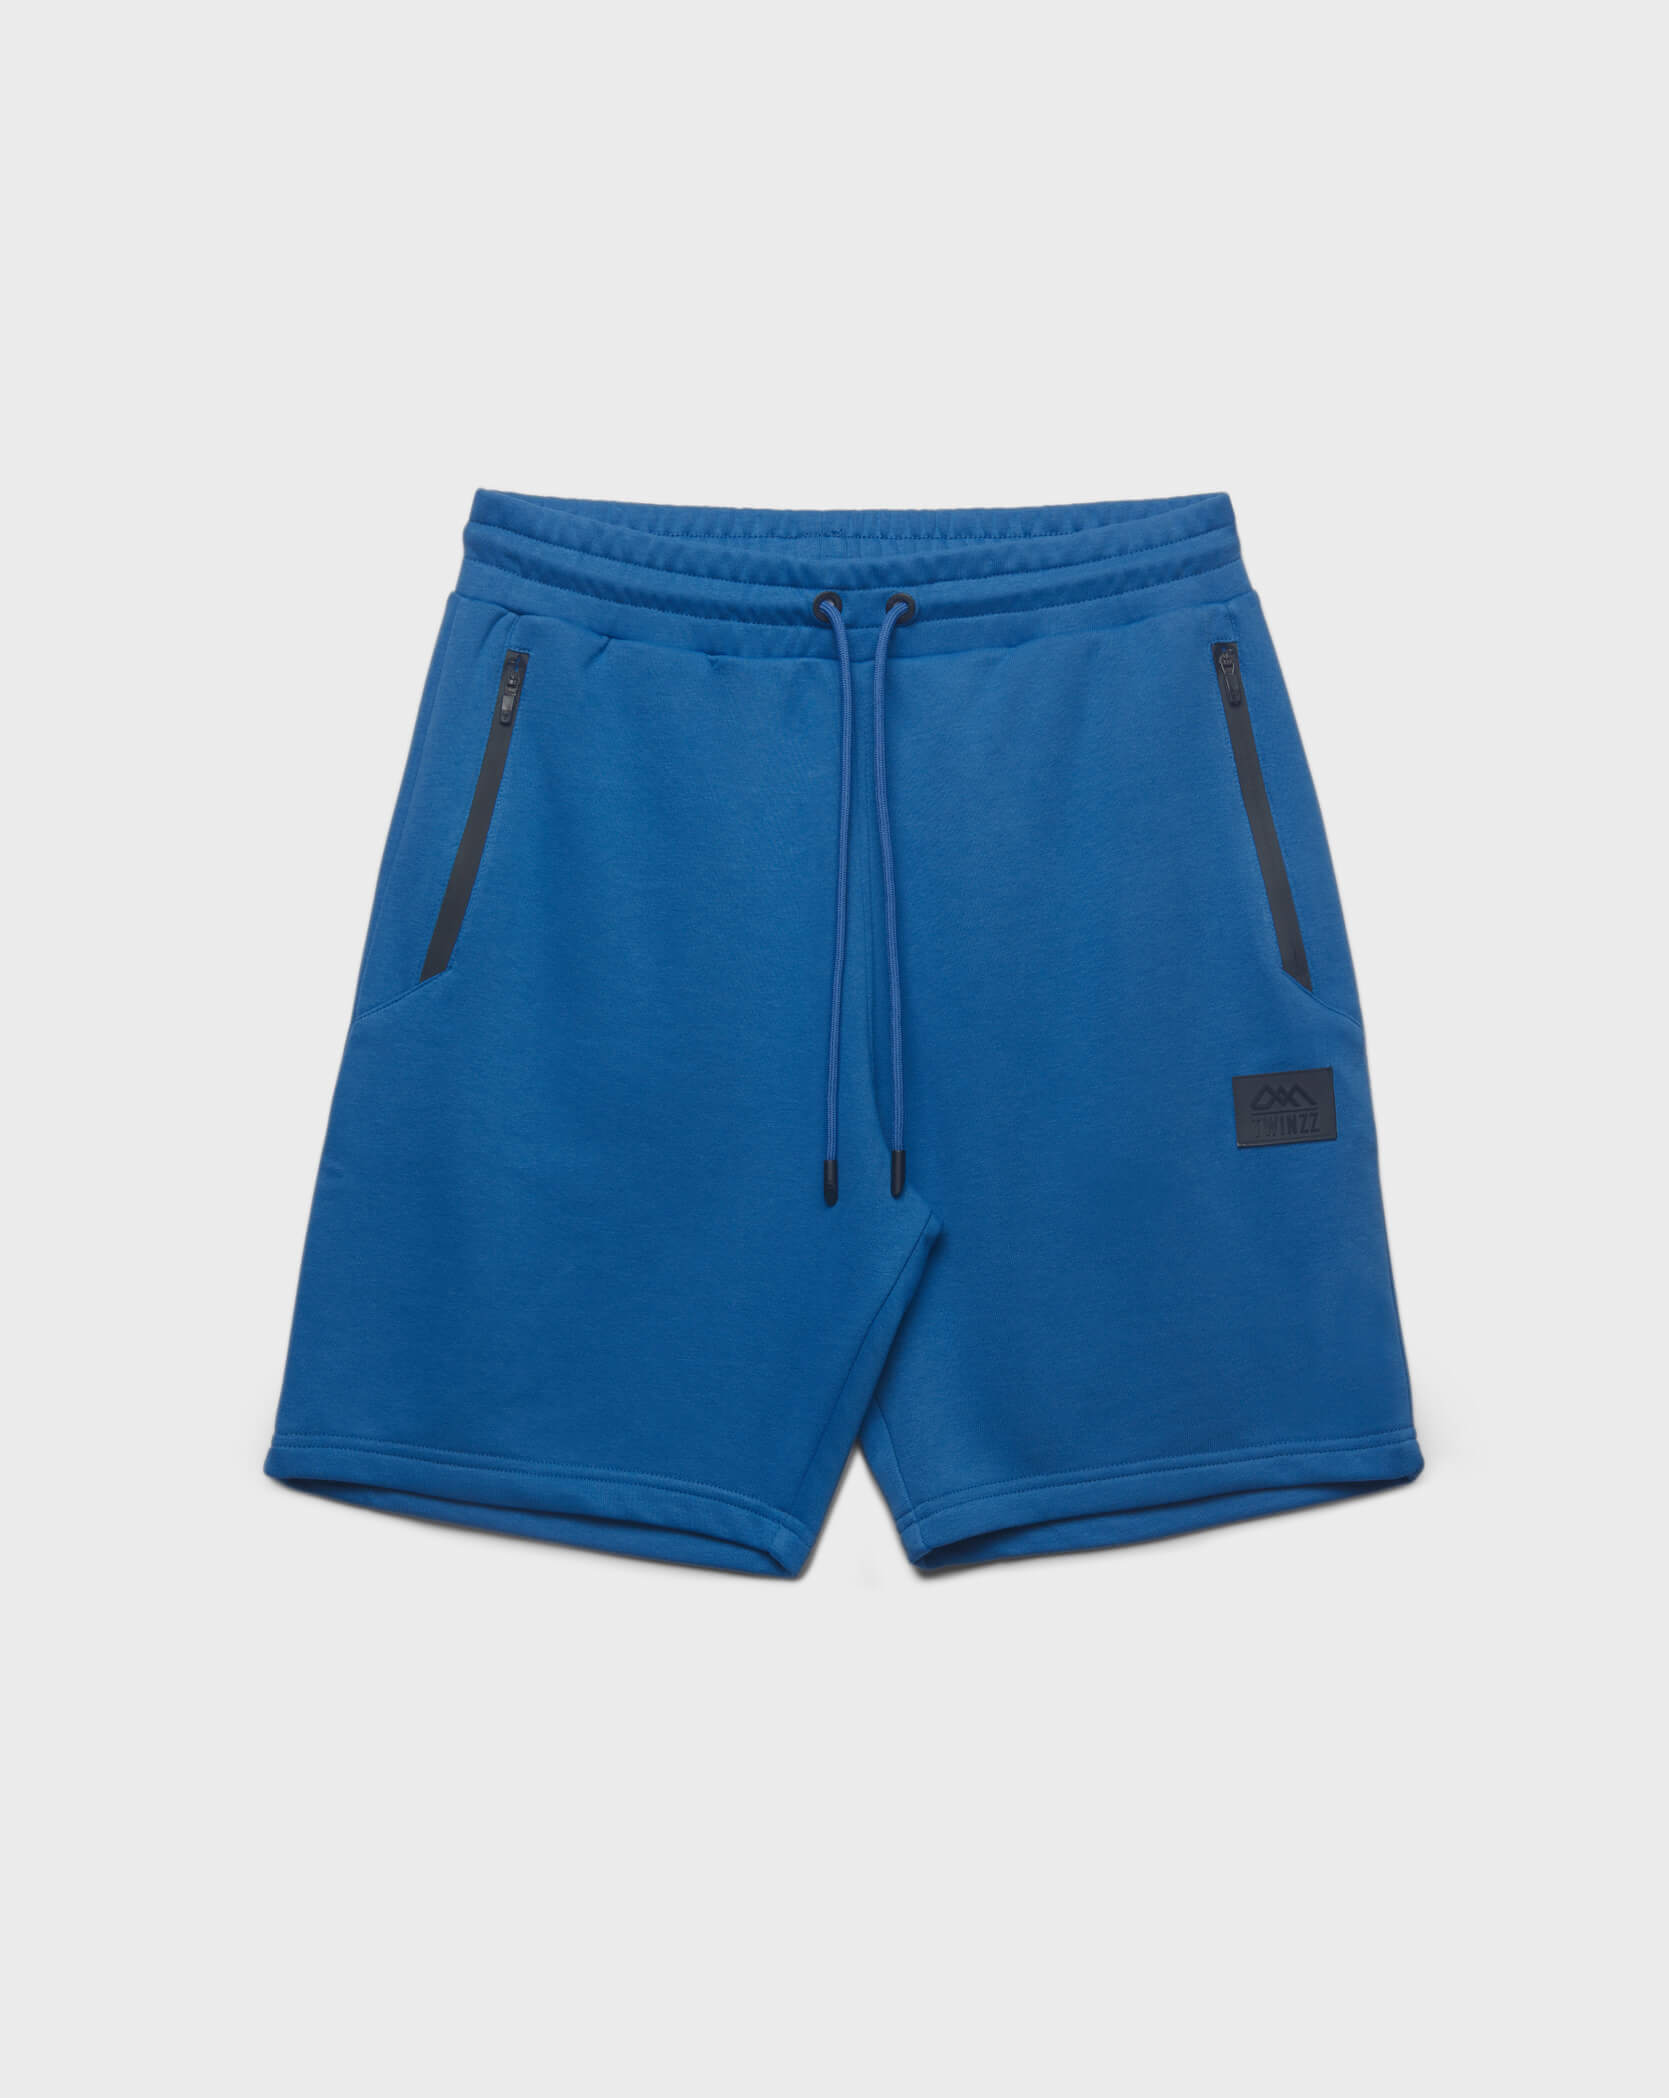 Twinzz blue lifestyle shorts